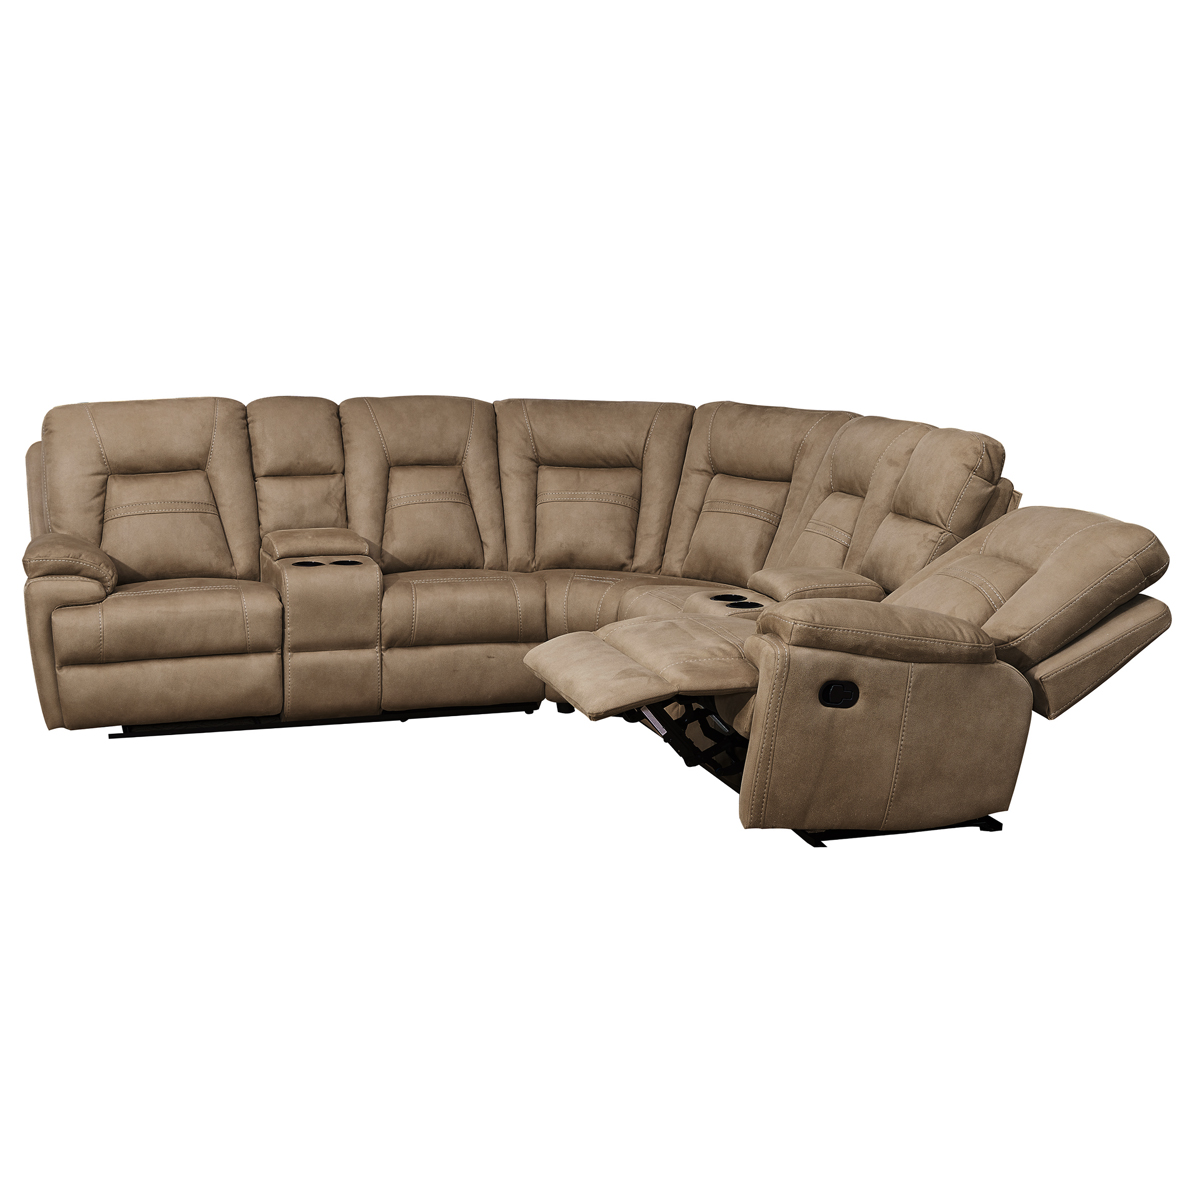 B Furniture Large Microfiber, Reclining Sectional Sofa Microfiber